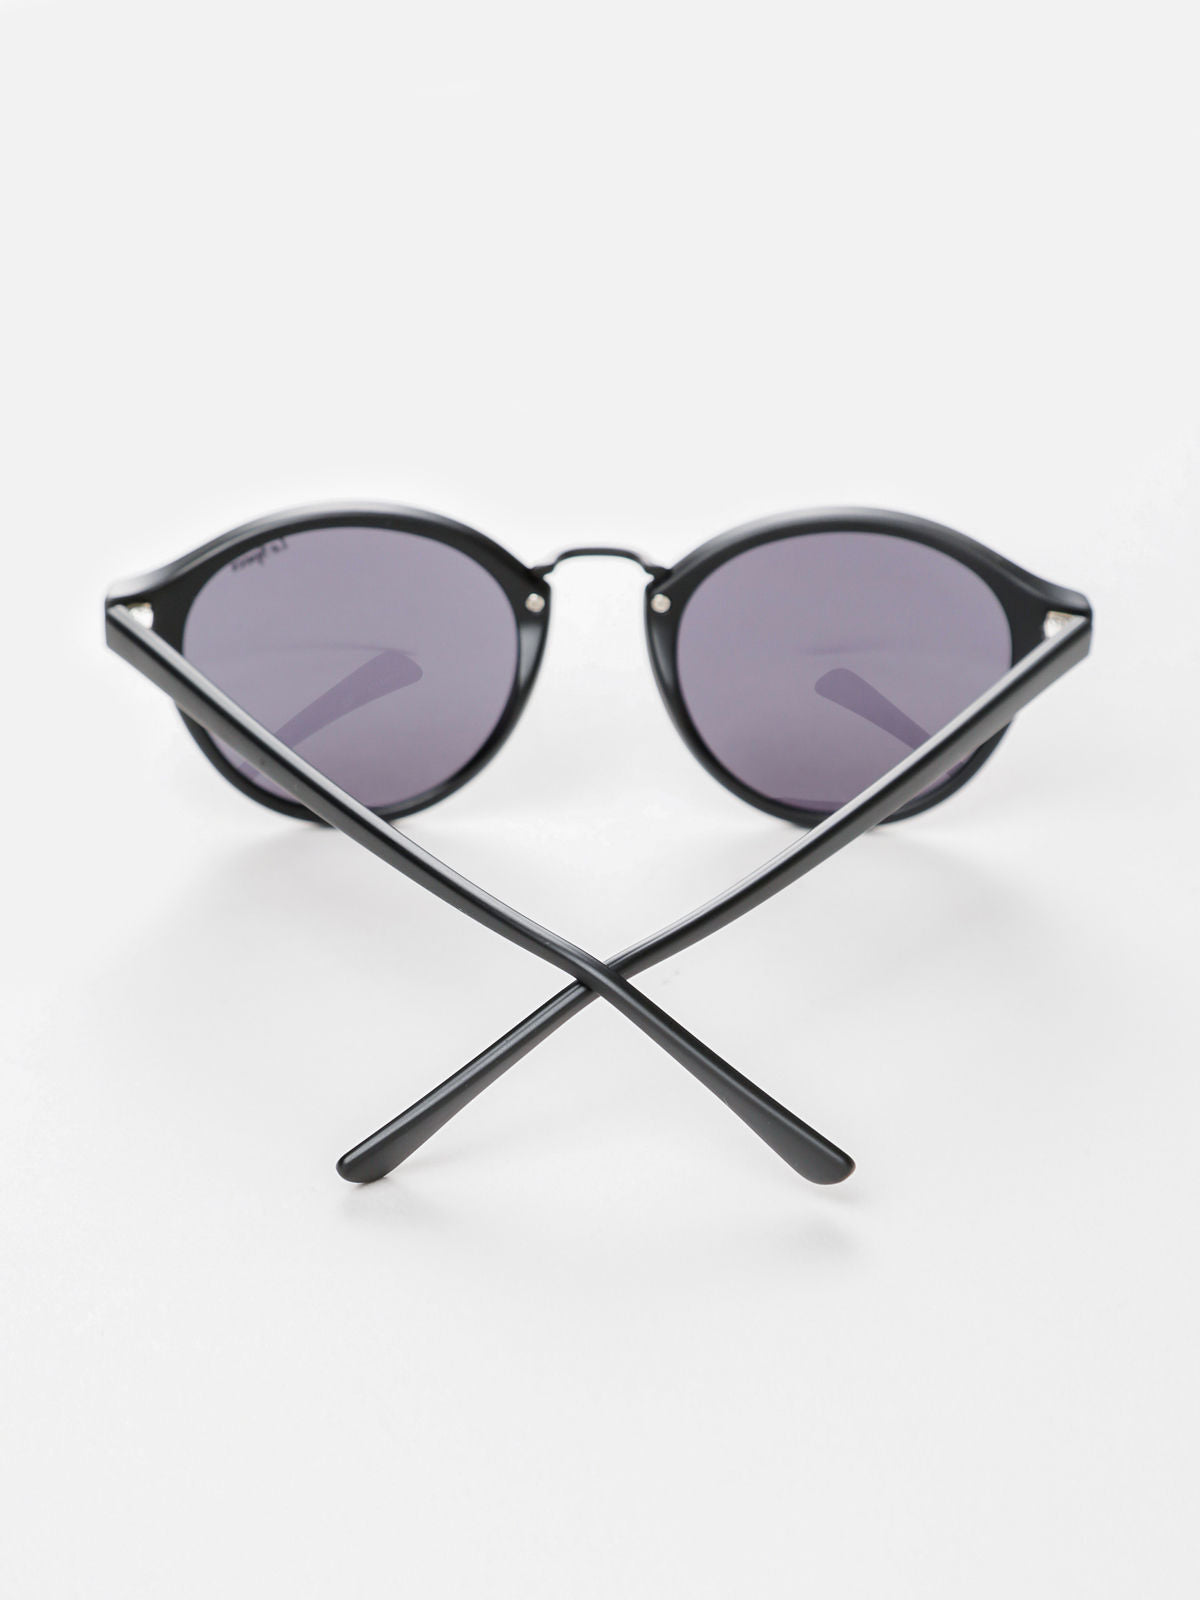 Paradox Sunglasses in Matte Black